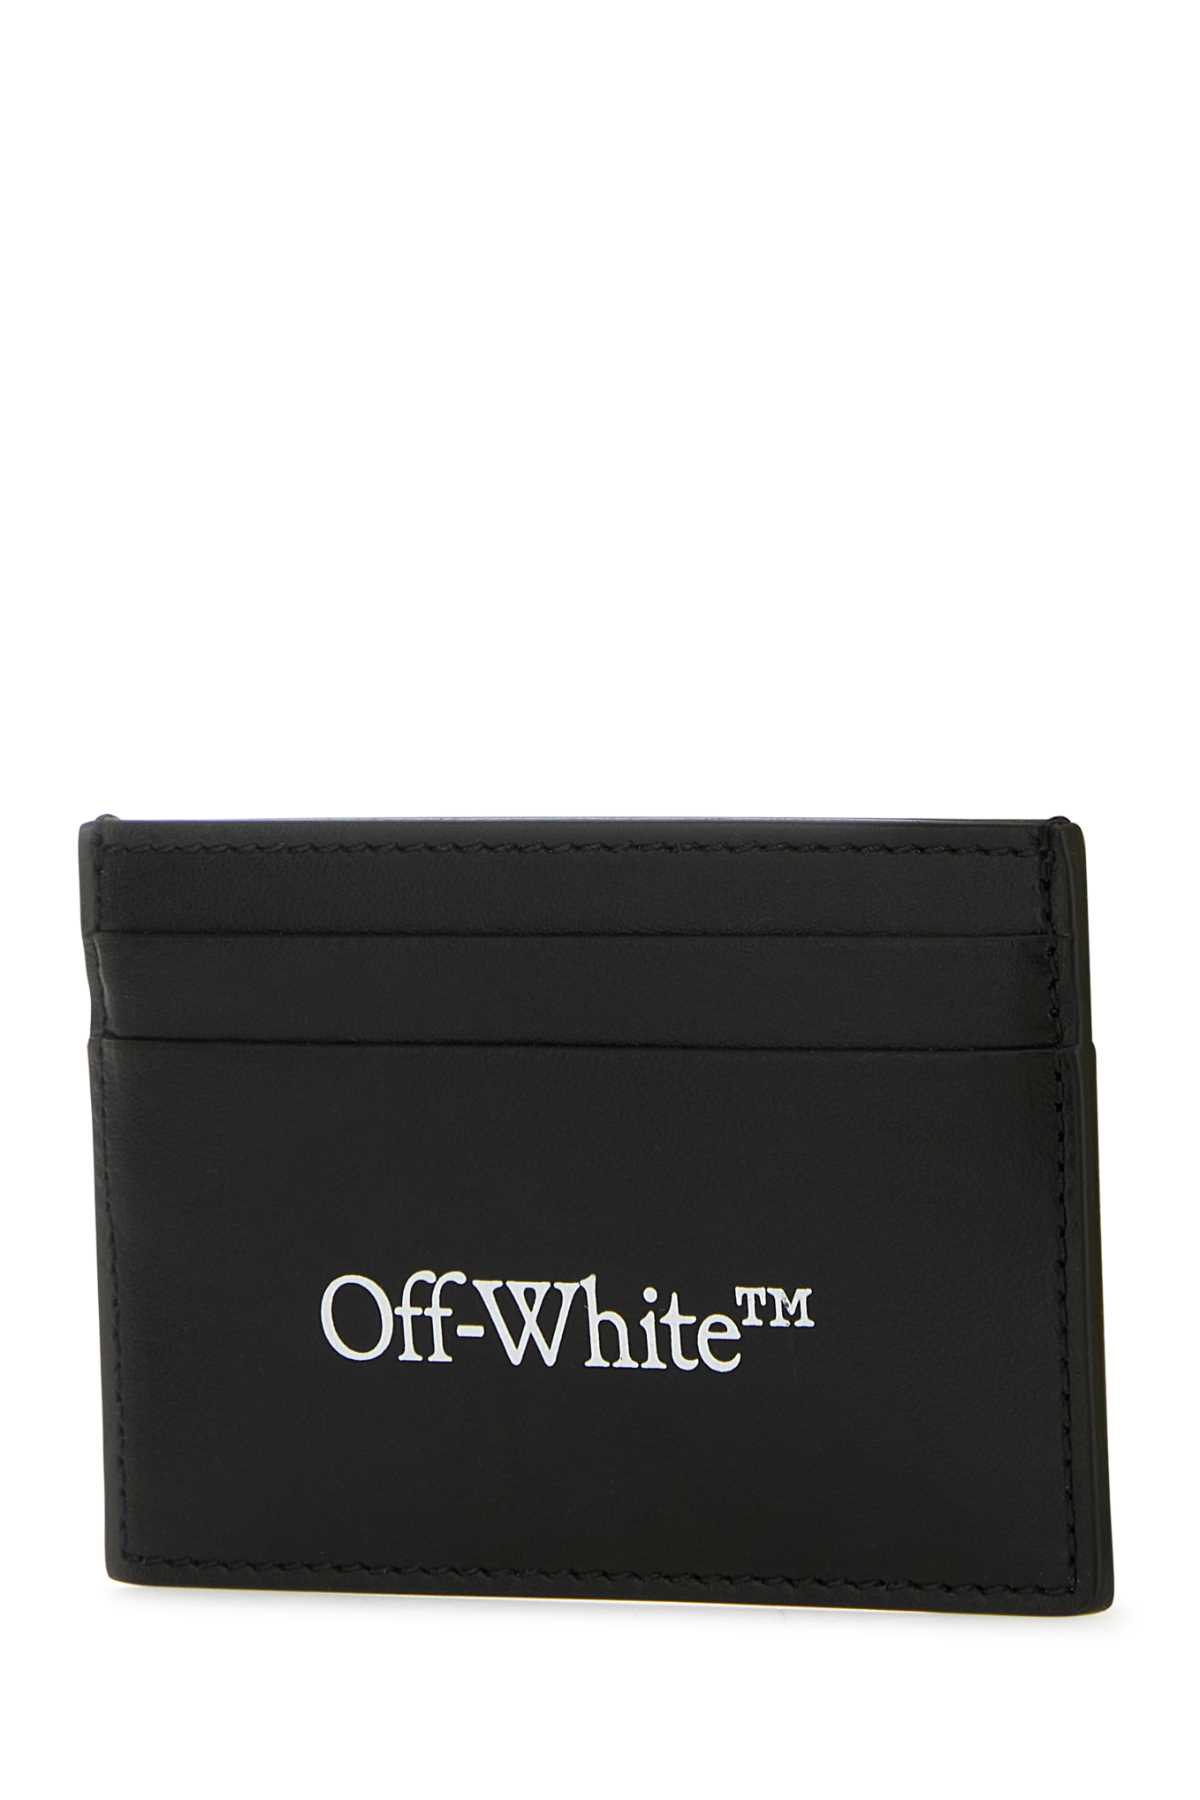 OFF-WHITE BLACK LEATHER CARD HOLDER